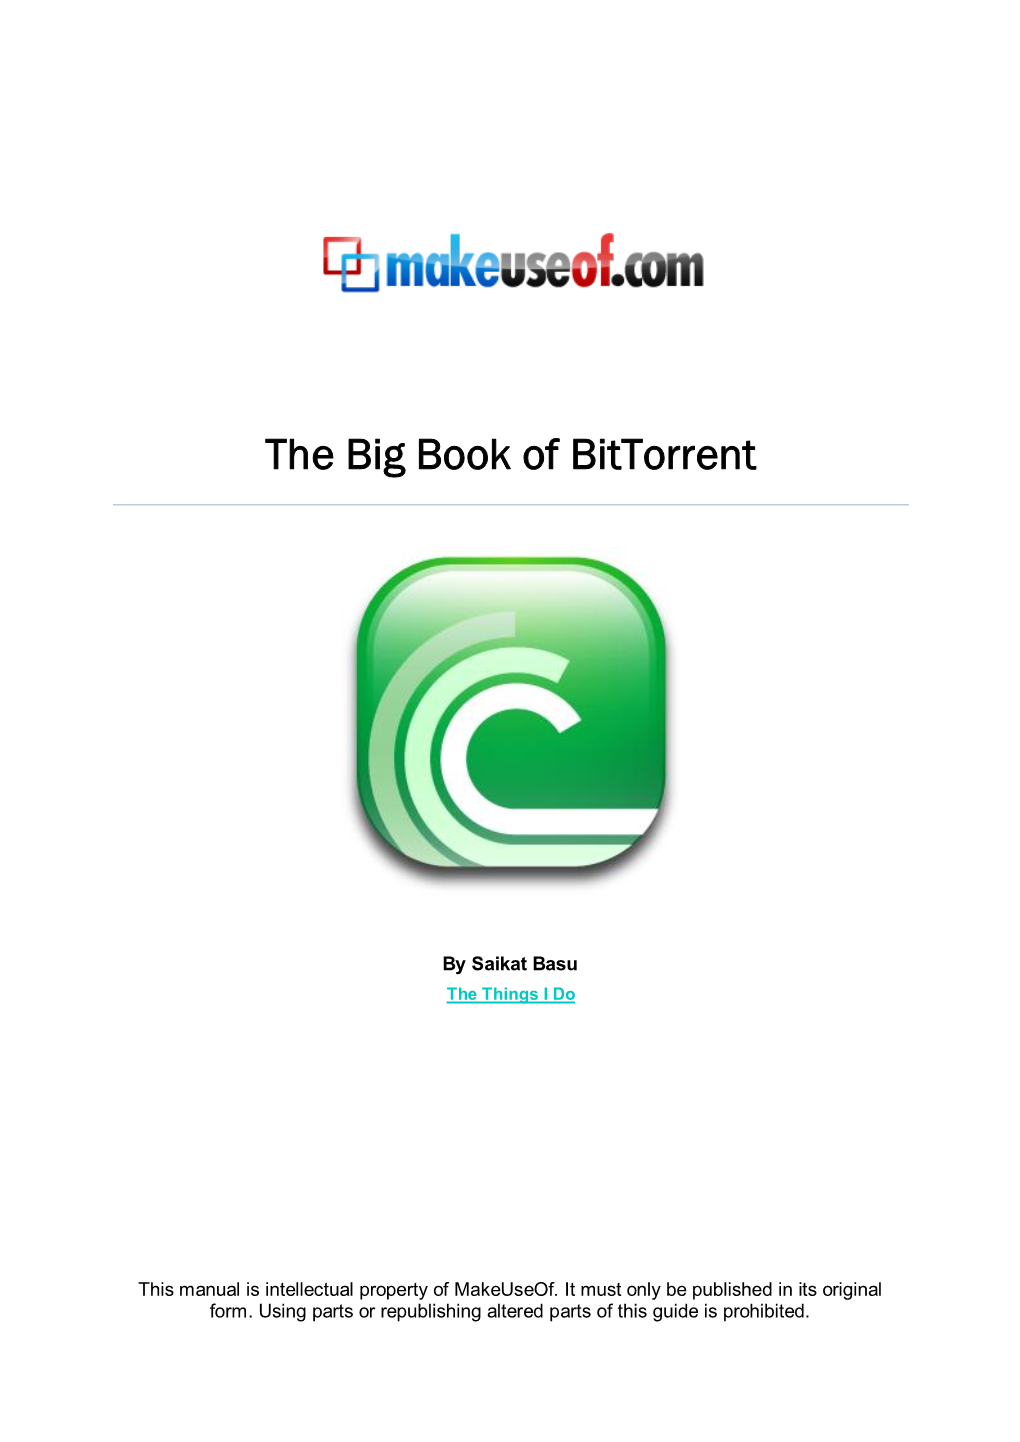 The Big Book of Bittorrent.Pdf